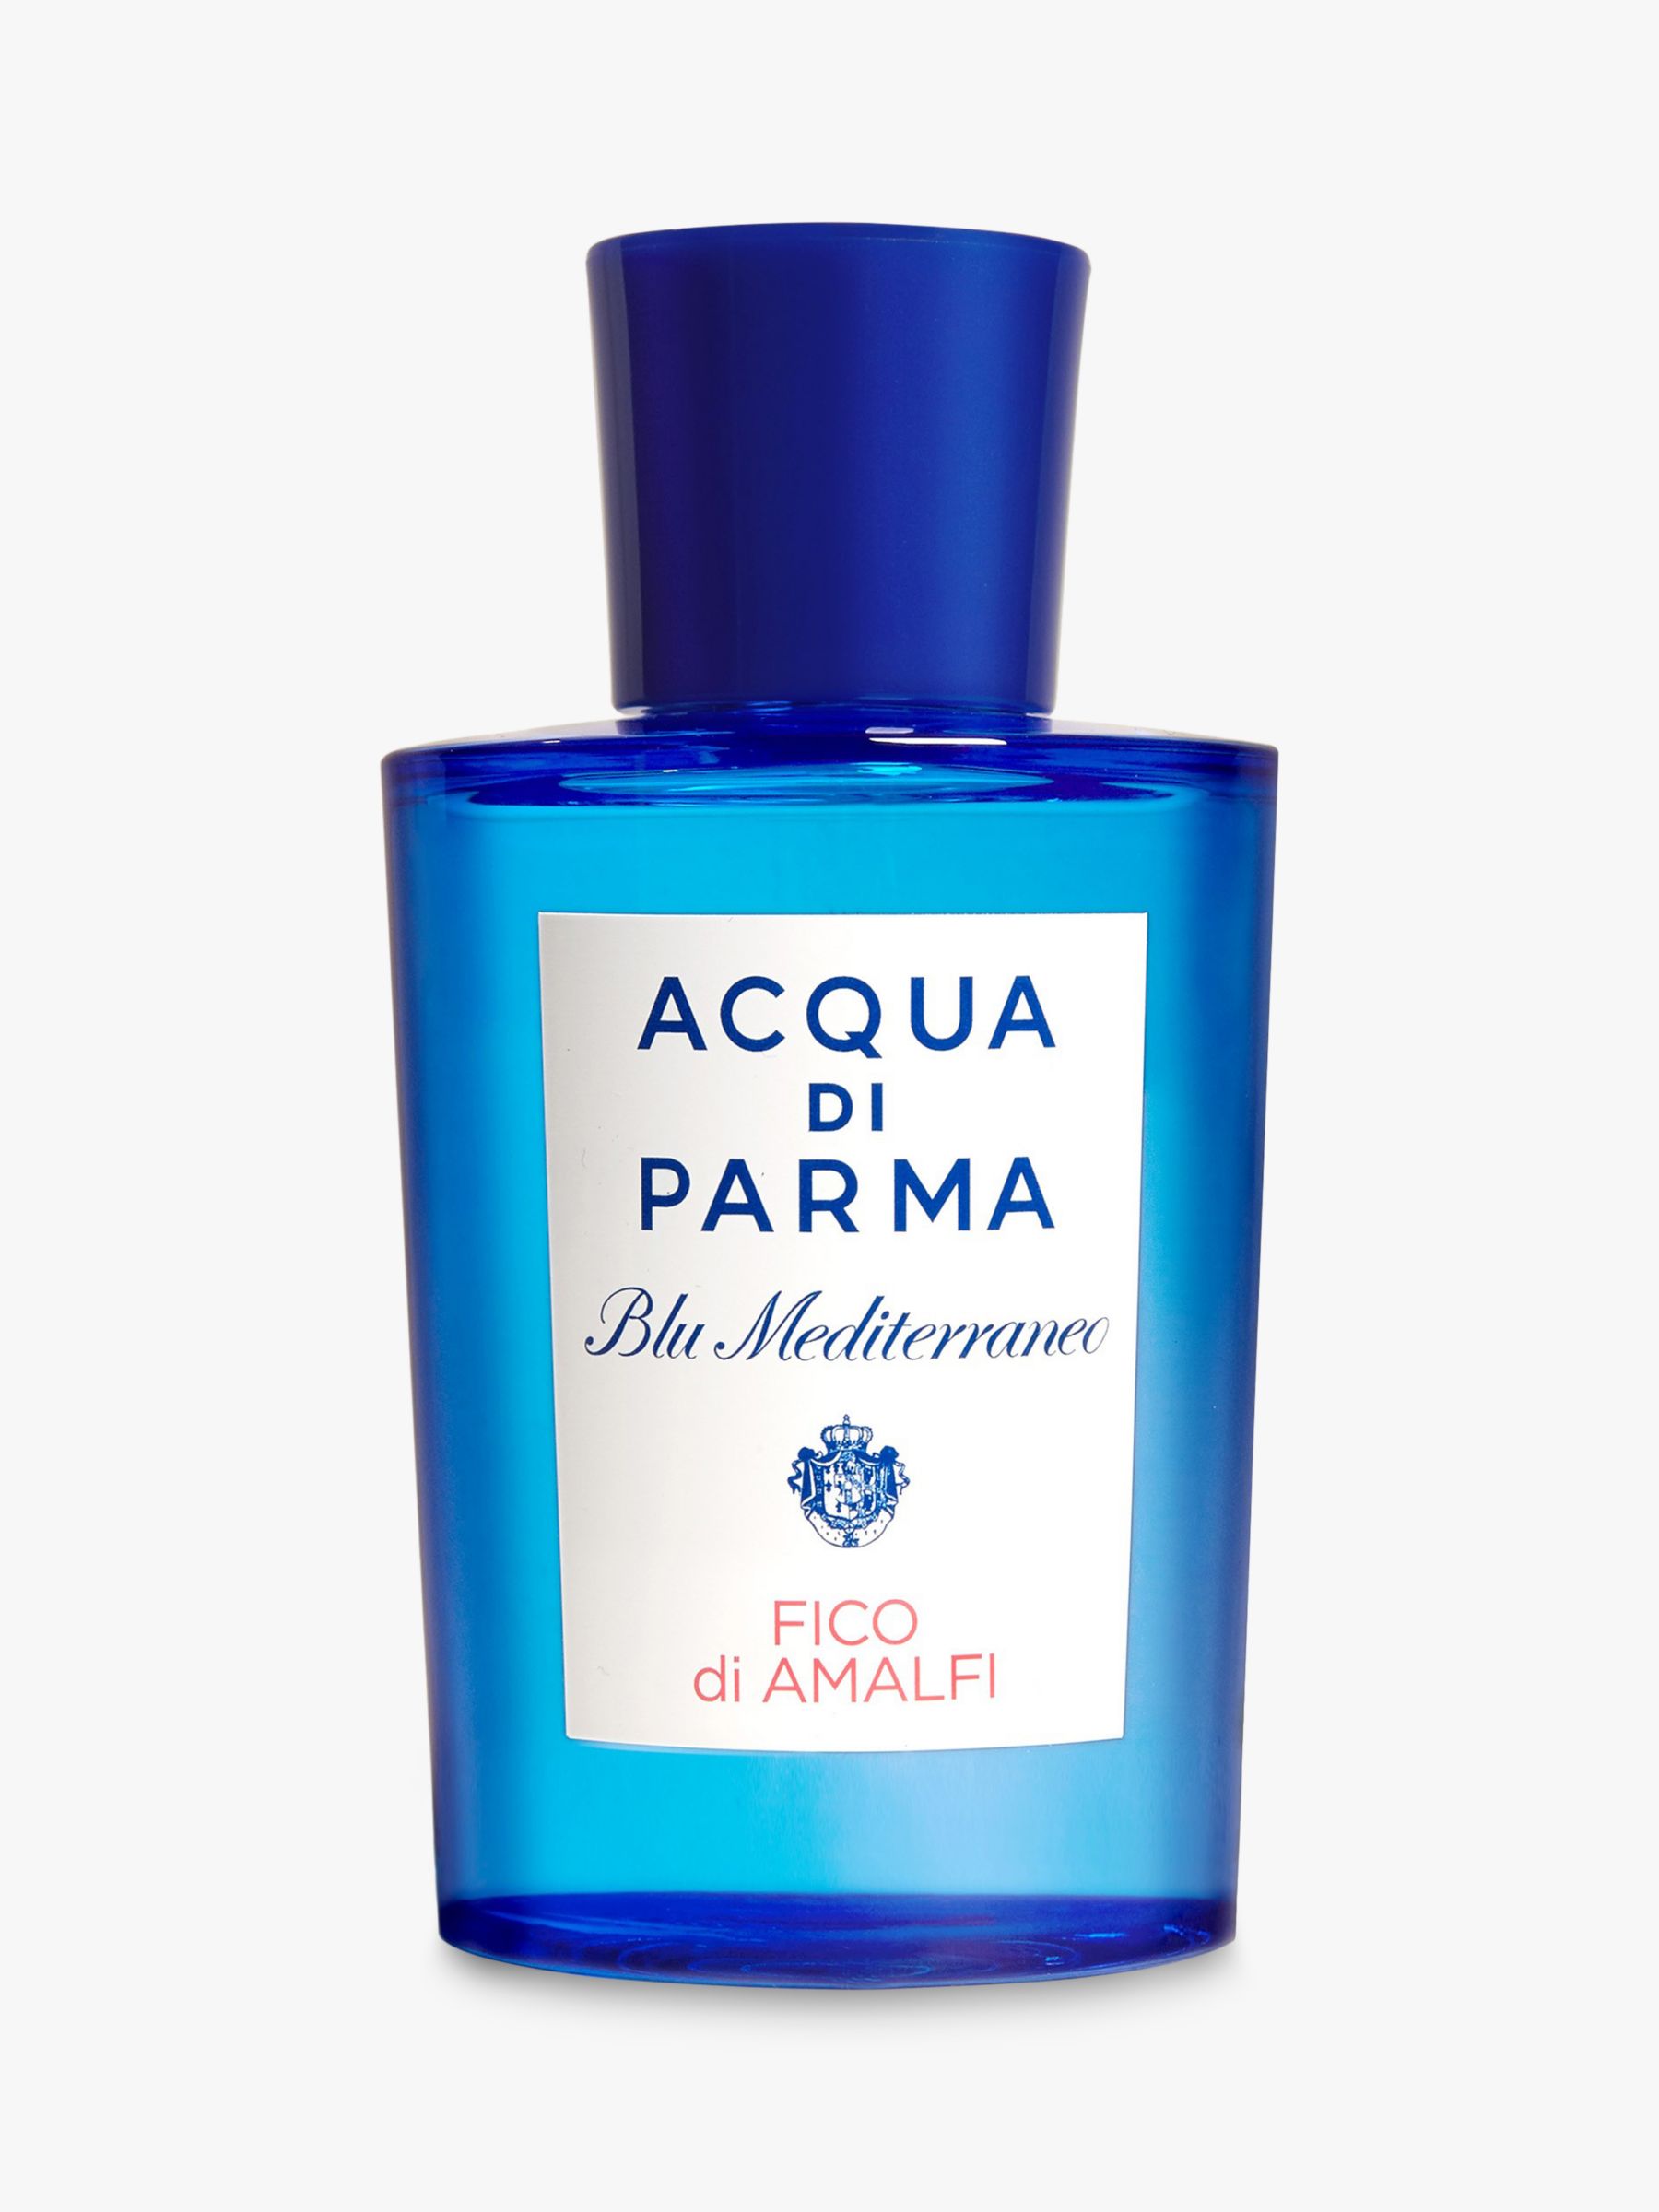 Acqua di Parma Blu Mediterraneo Fico di Amalfi Eau de Toilette Spray, 150ml 1